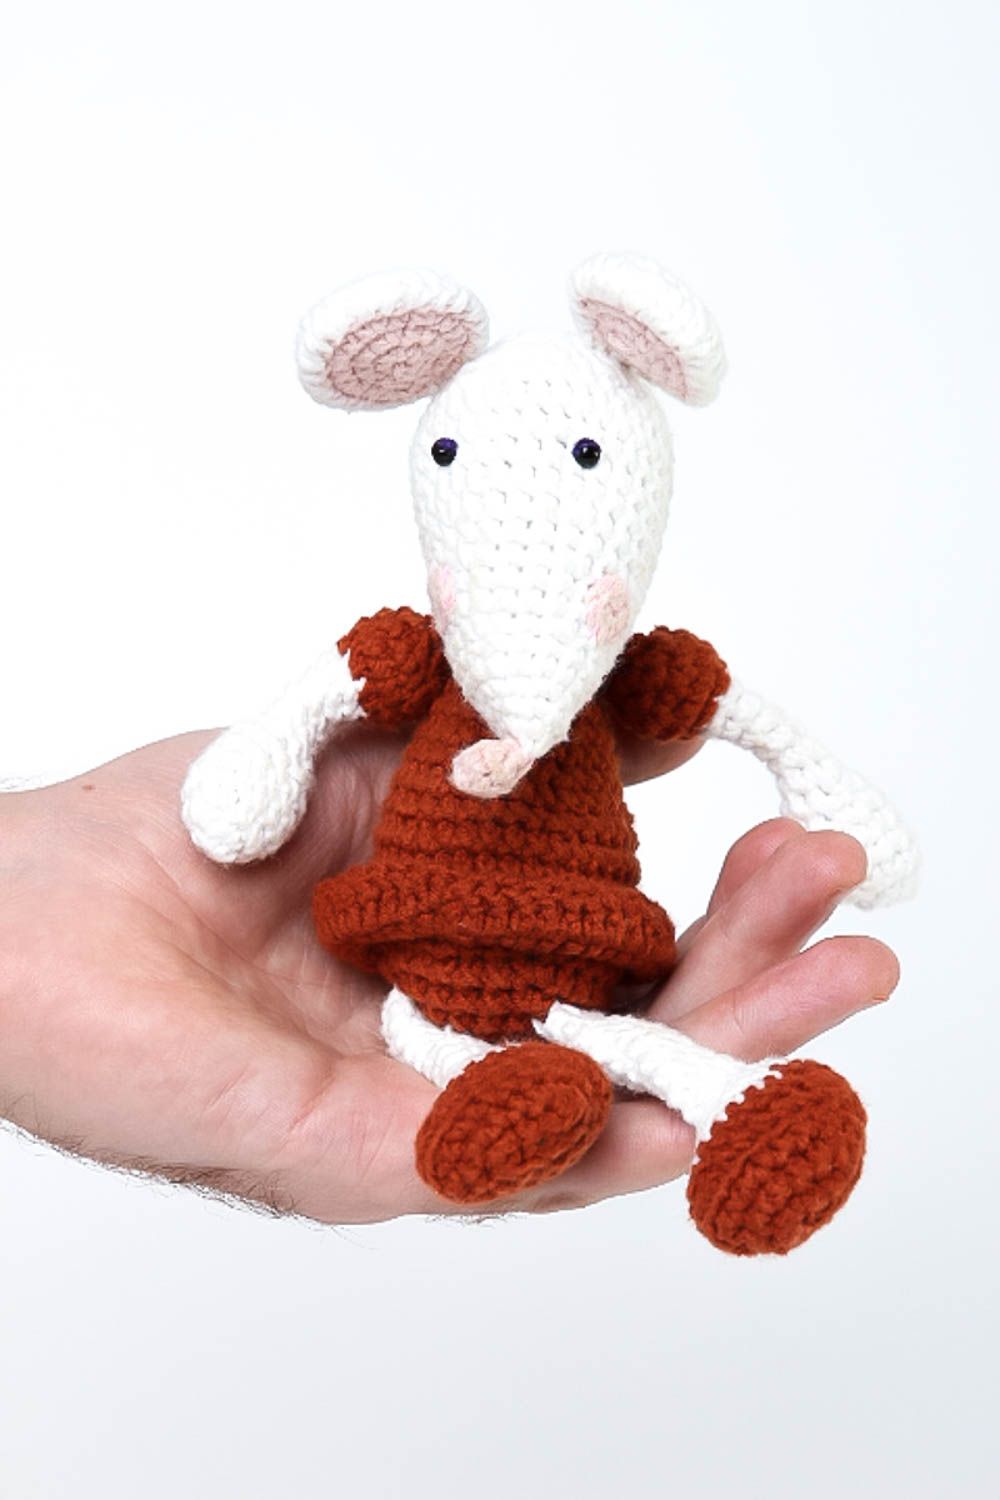 Handmade crocheted doll for children crocheted mouse toy nursery decor ideas photo 5